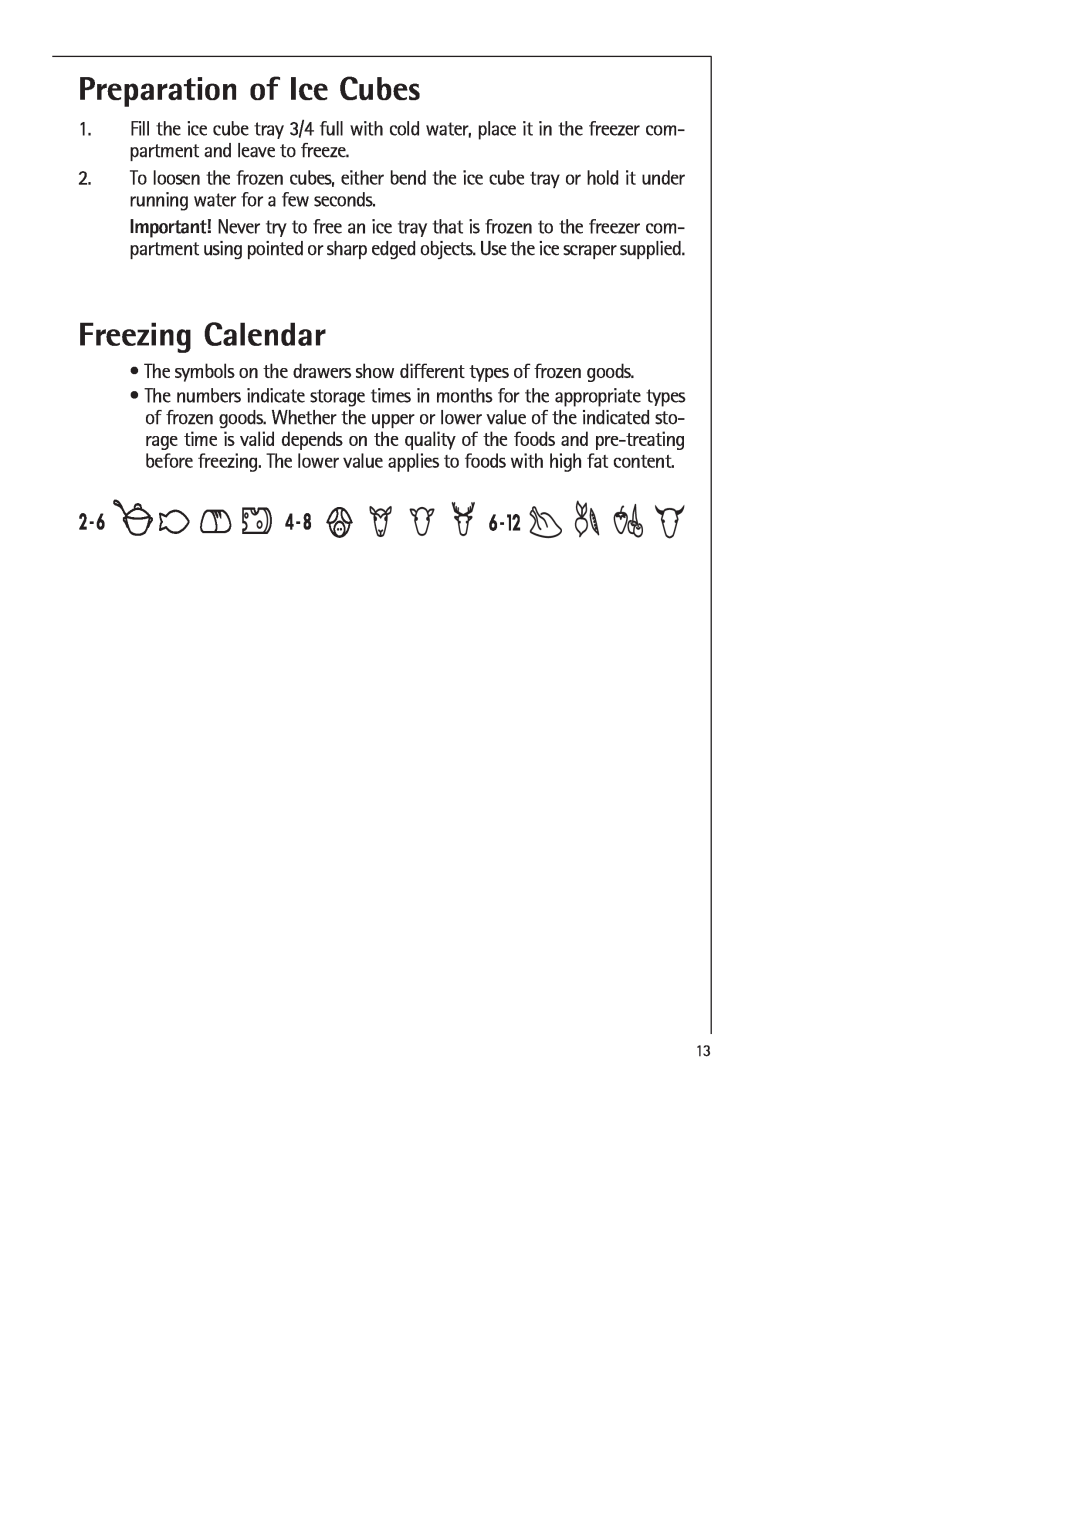 Electrolux SANTO 70398-DT manual Preparation of Ice Cubes, Freezing Calendar 